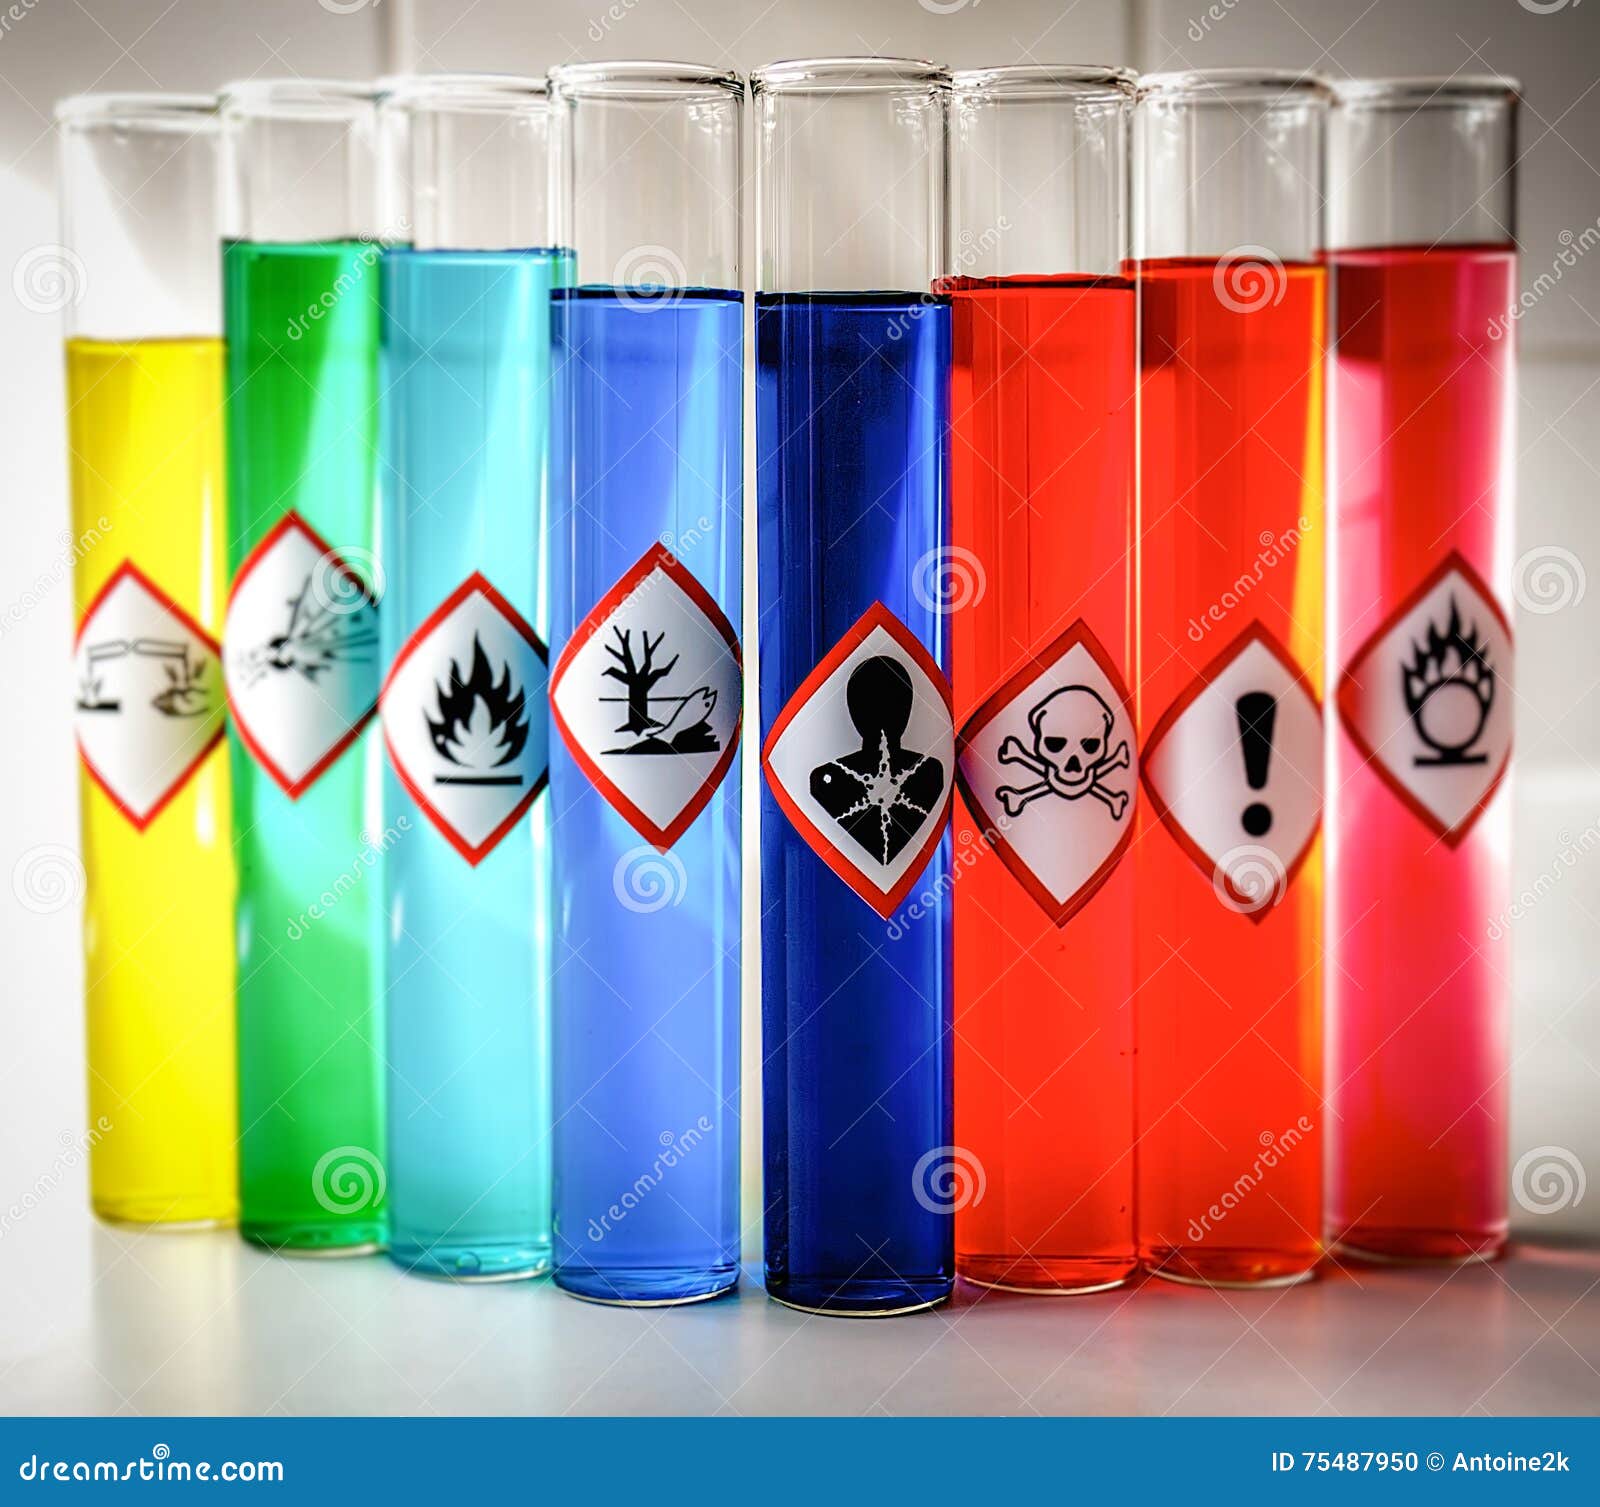 aligned chemical danger pictograms - serious health hazard